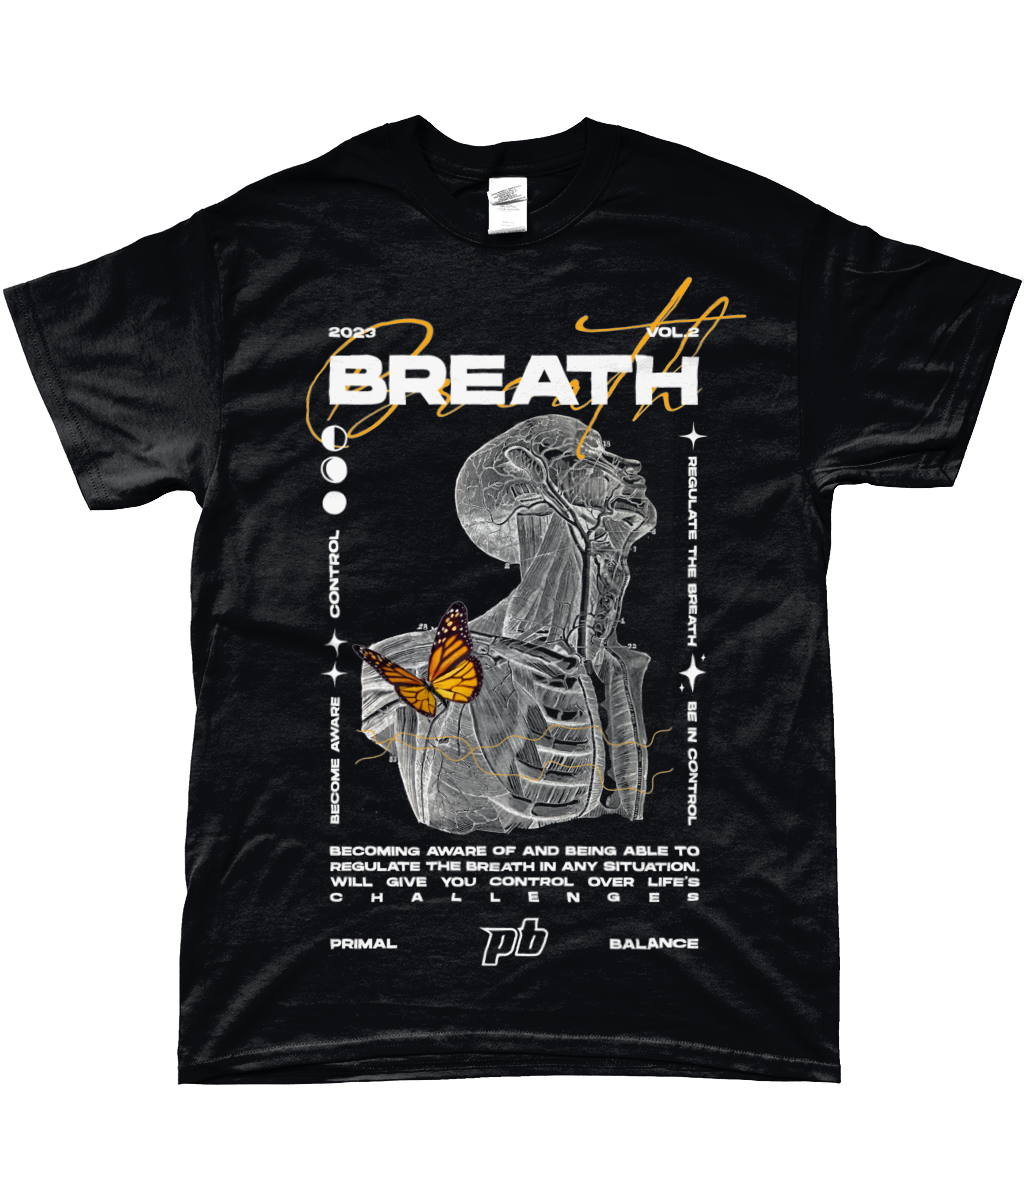 Breath T-Shirt (Black)